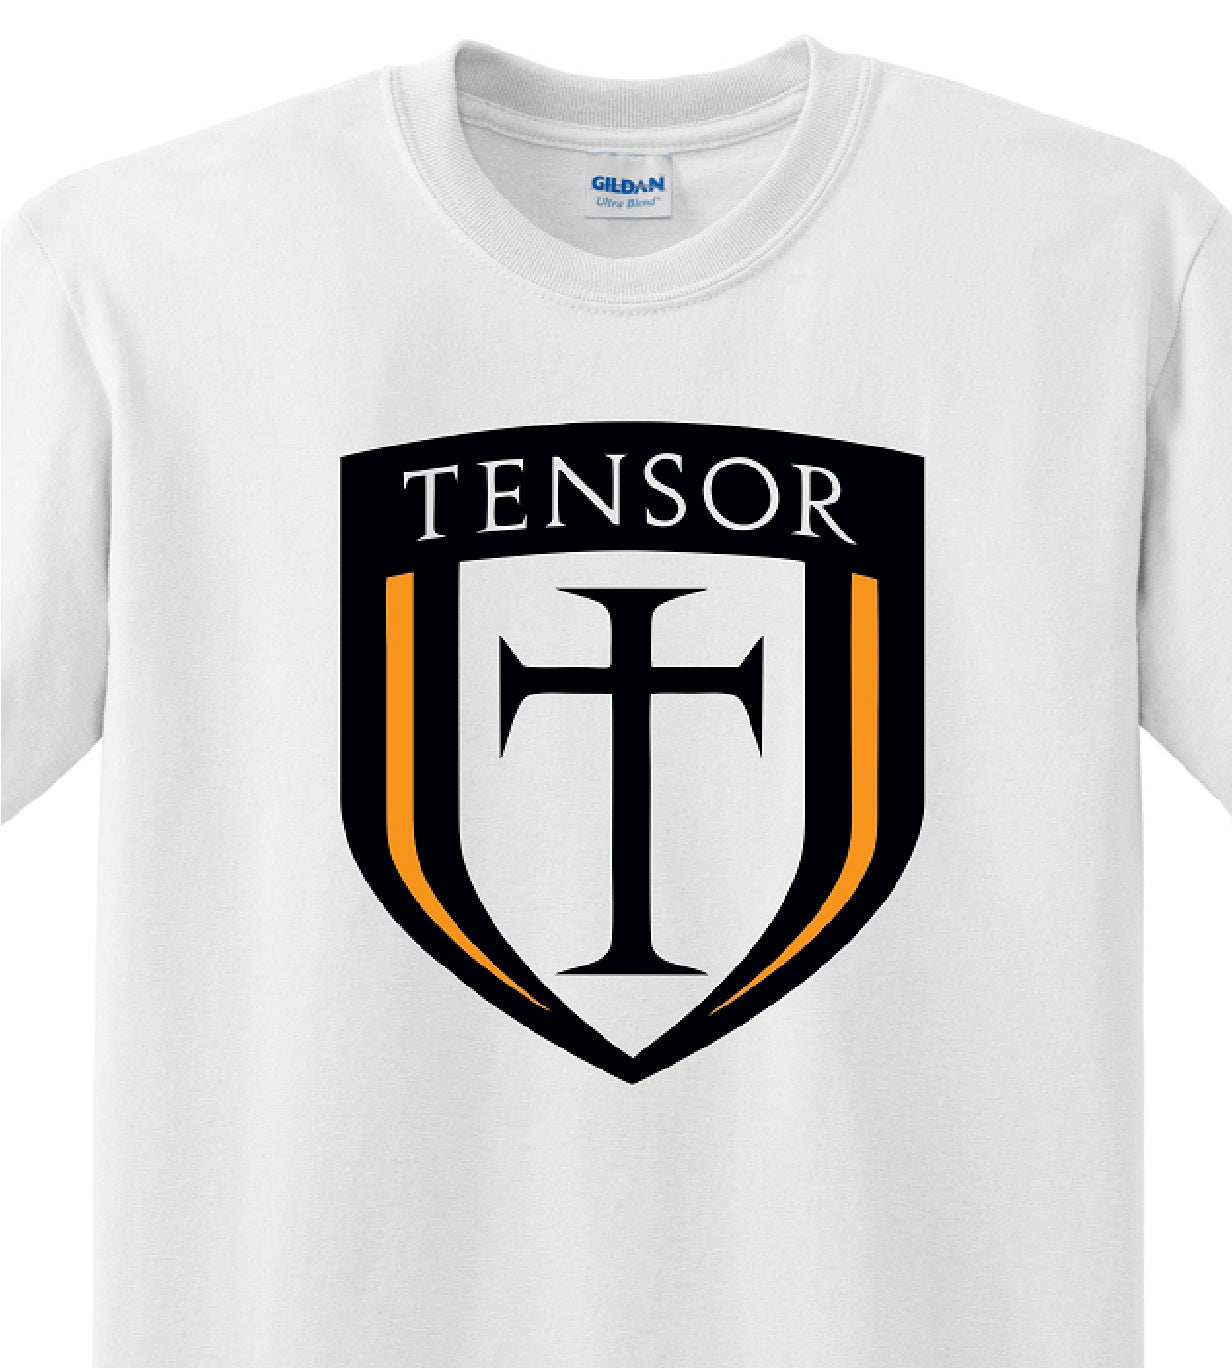 Skate Men's Shirt - Tensor (White) - MYSTYLEMYCLOTHING